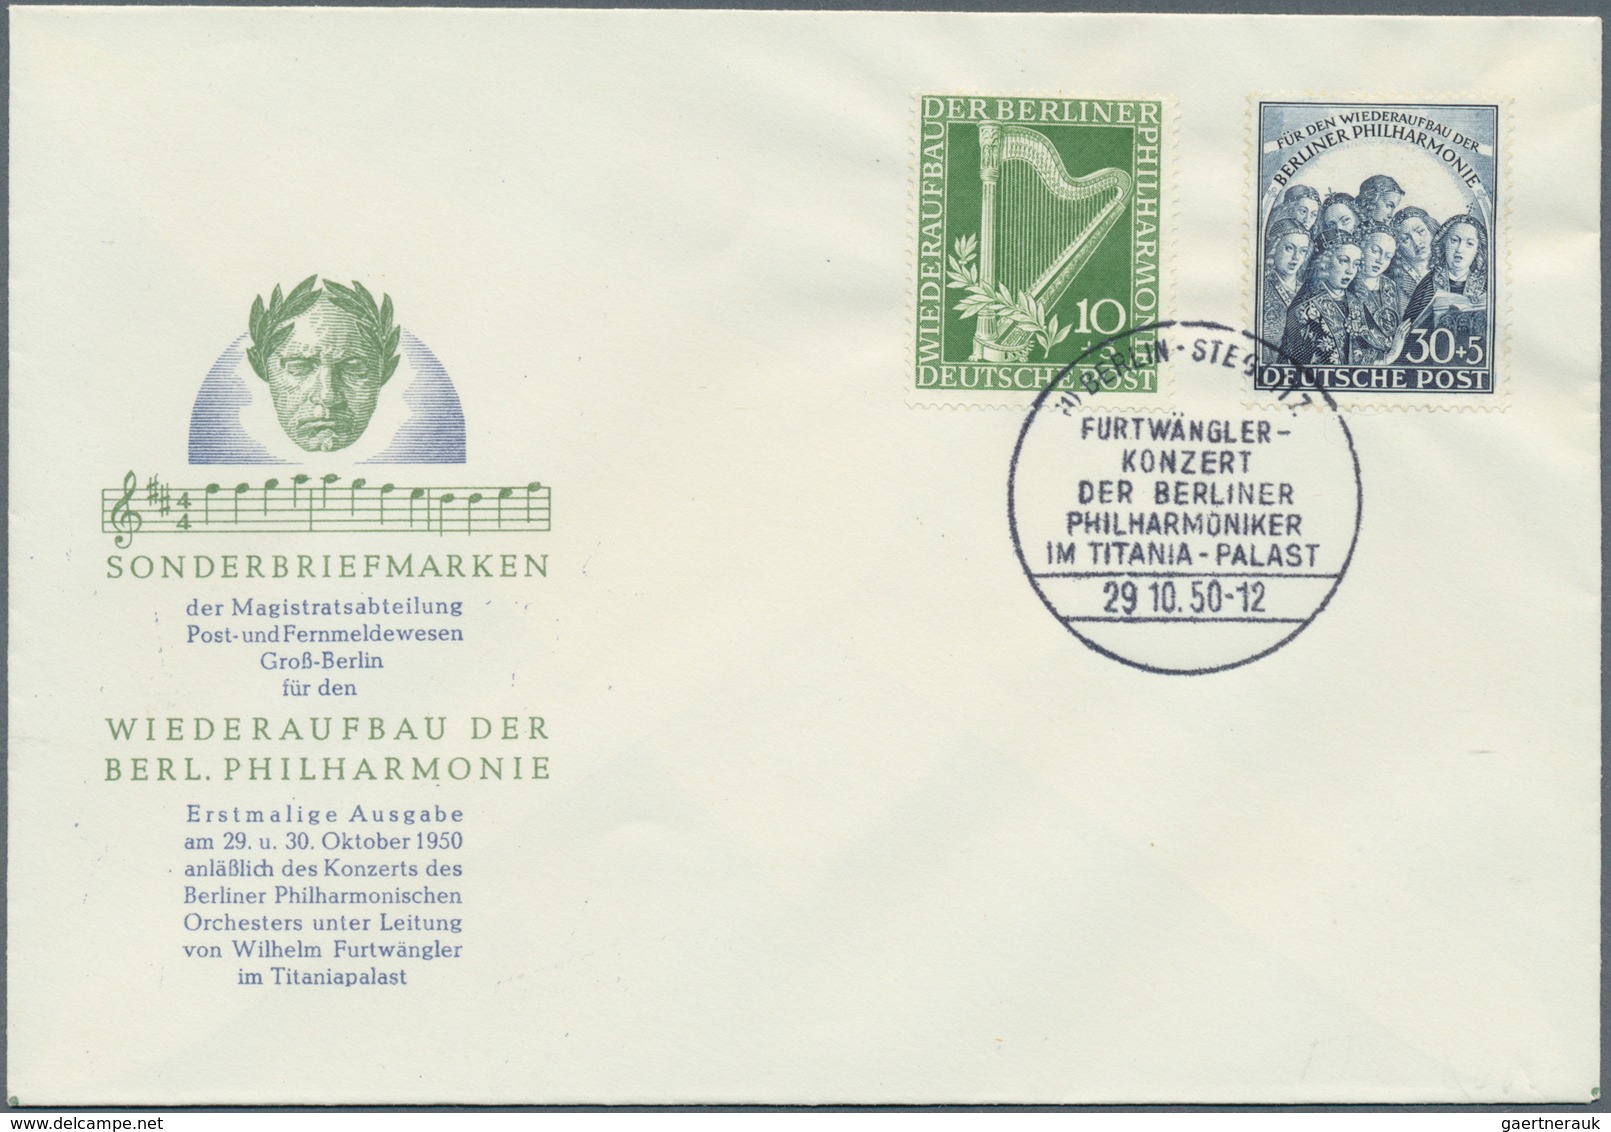 Berlin: Ab 1949. Tolle Partie früher, guter Briefe, dabei 61/63 FDC, 4x 72/73 FDC, 4x 87 FDC, 3x 80/